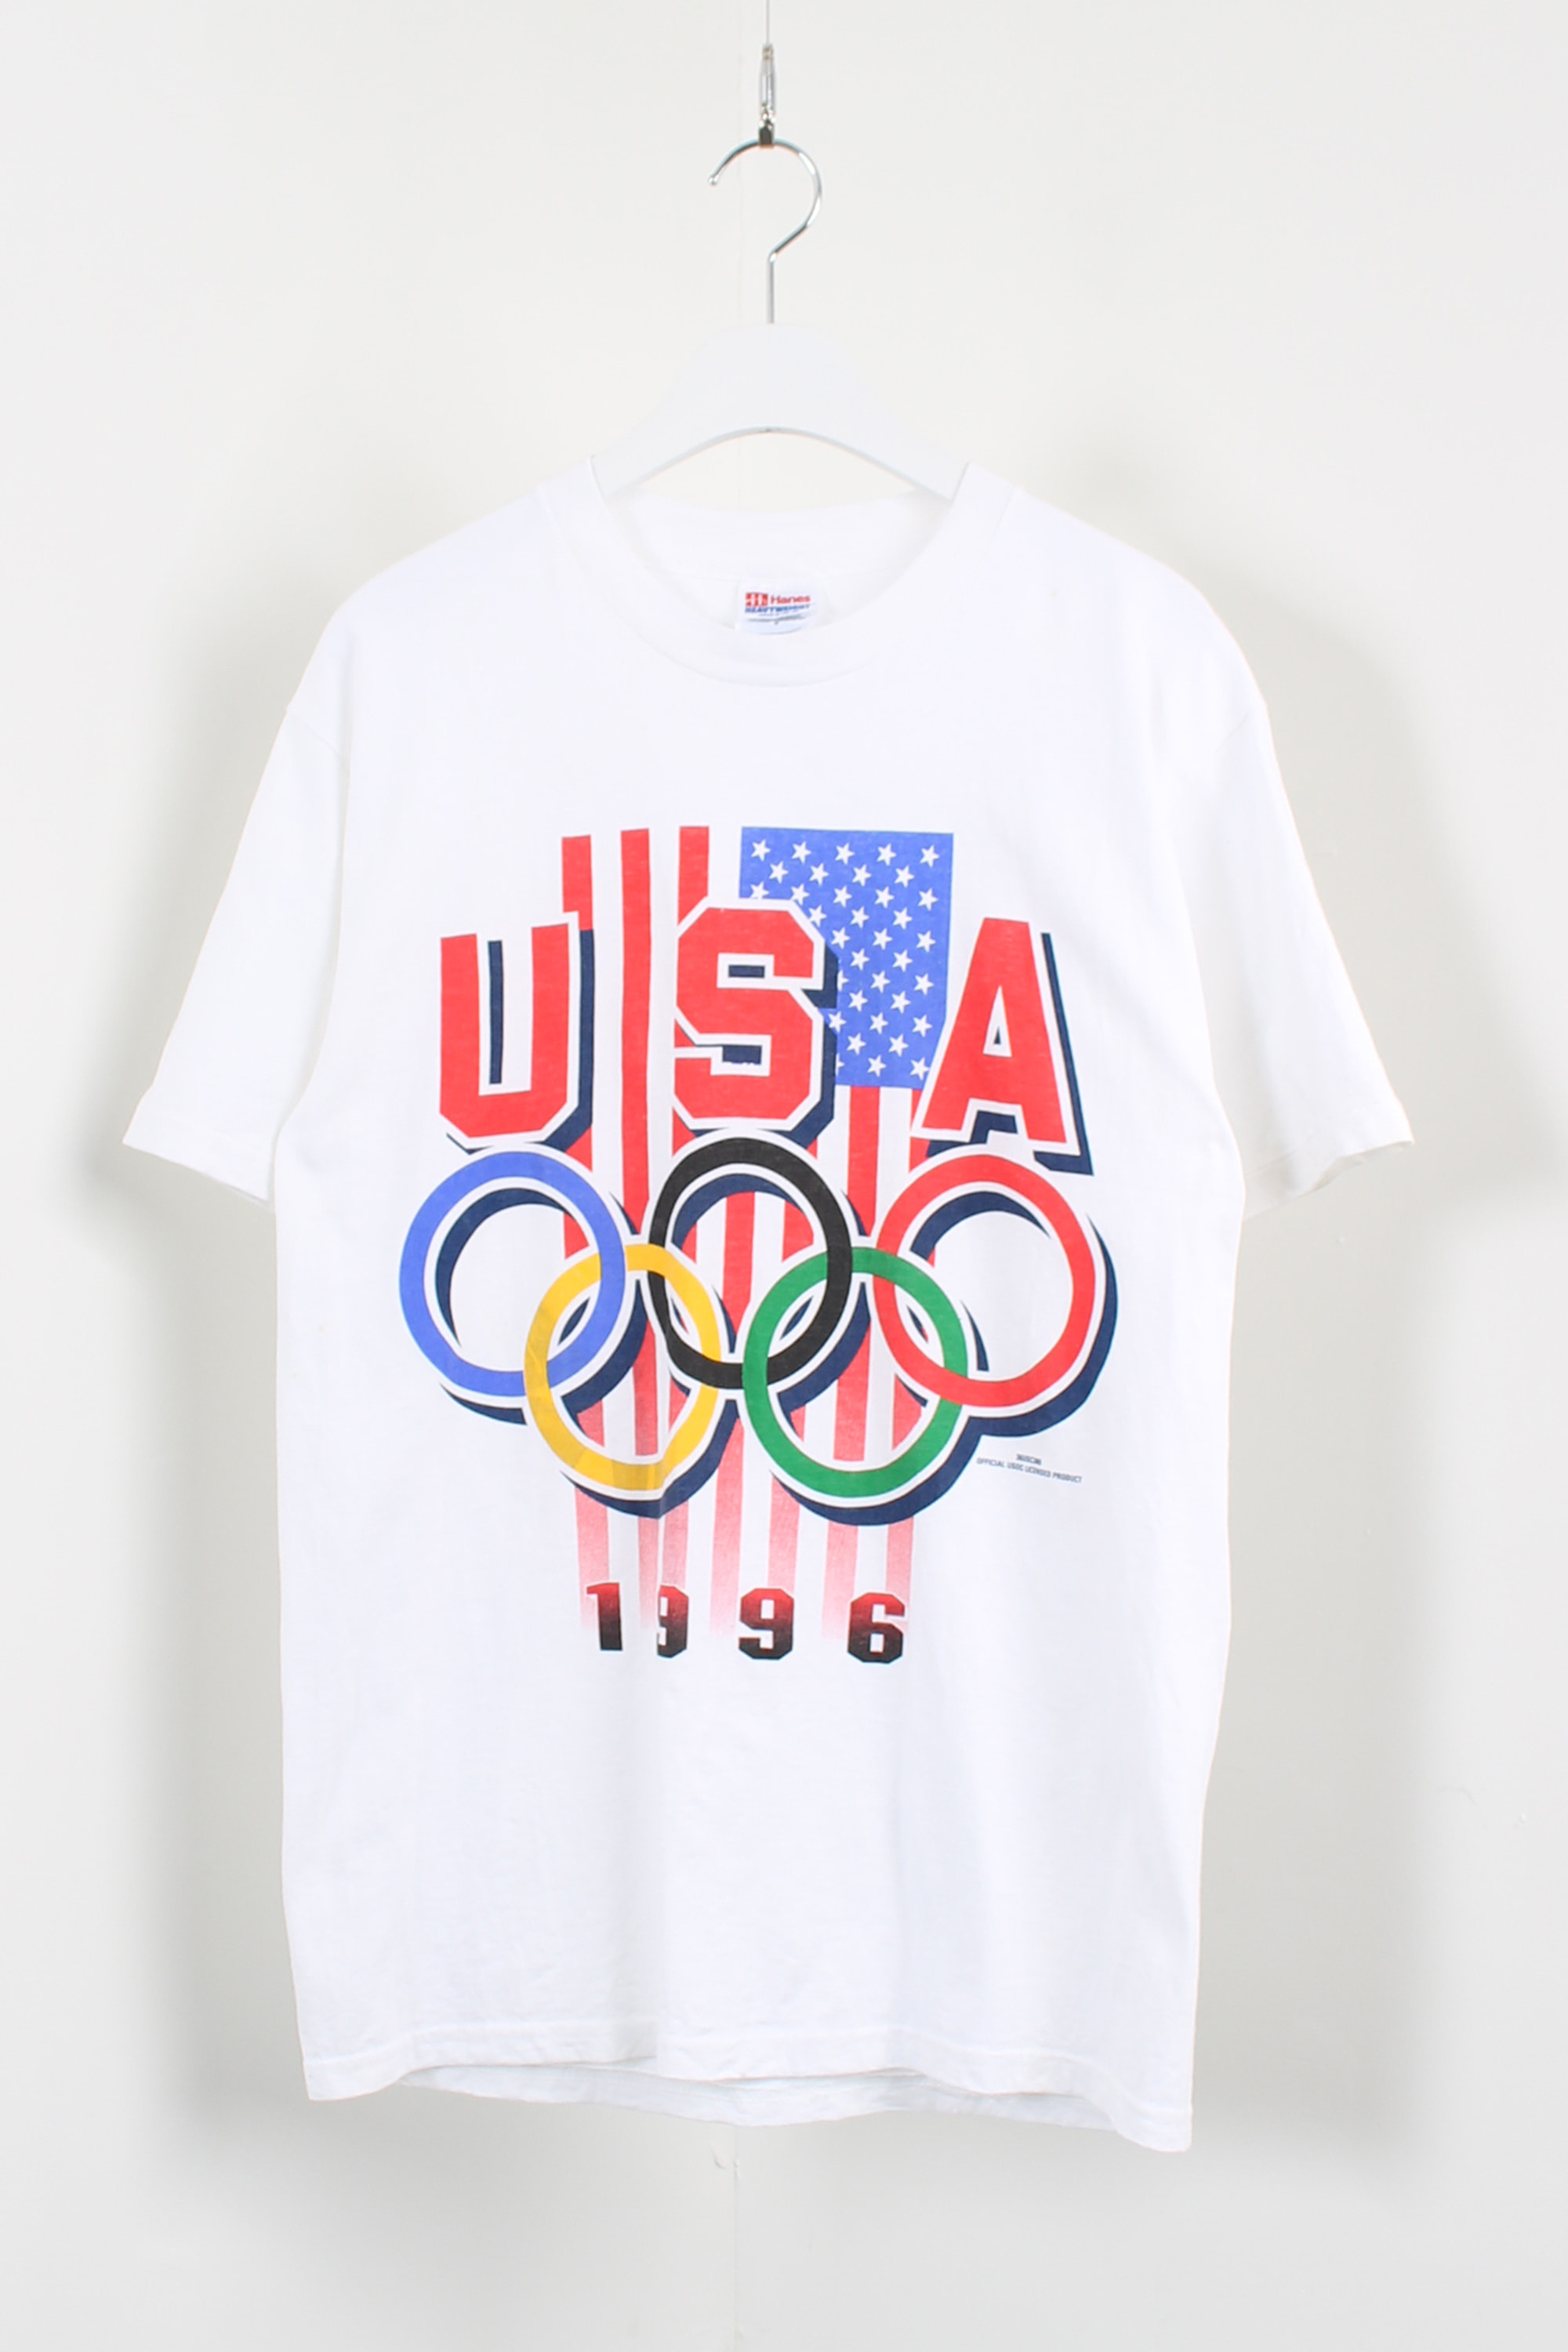 USA usoc t-shirt